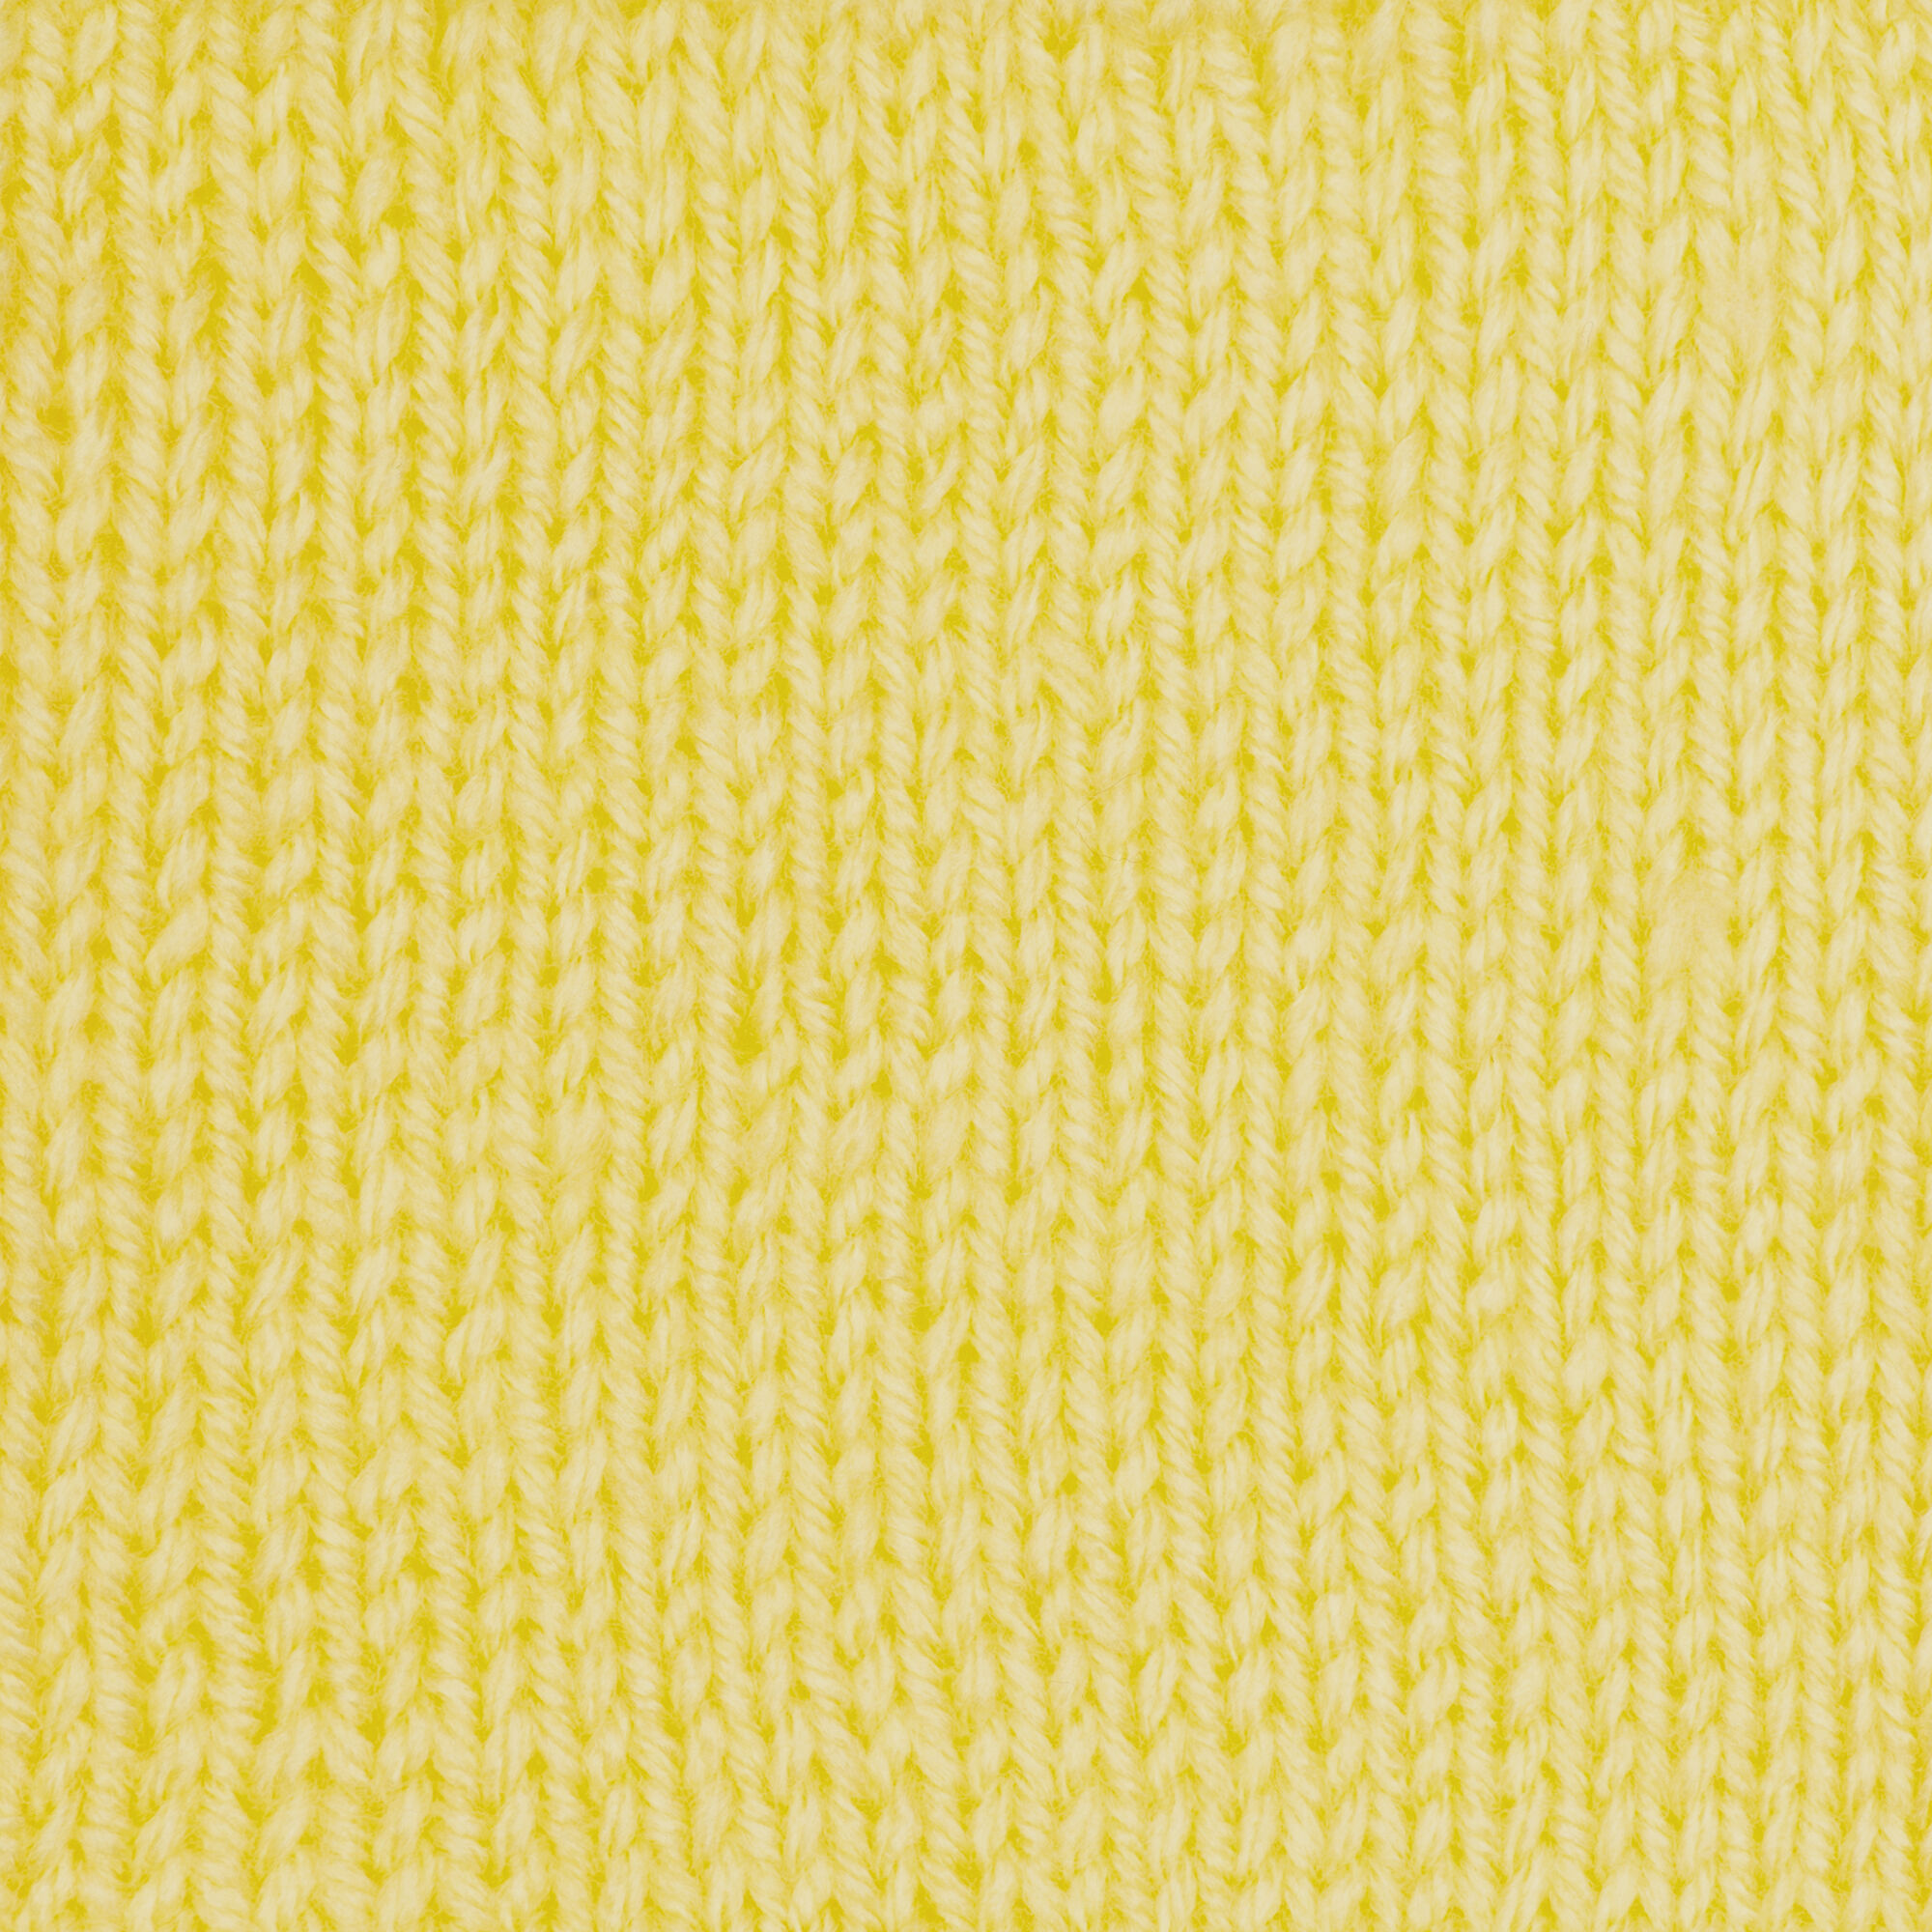 Red Heart Super Saver Yarn, Lemon, 7oz(198g), Medium, Acrylic - image 5 of 14